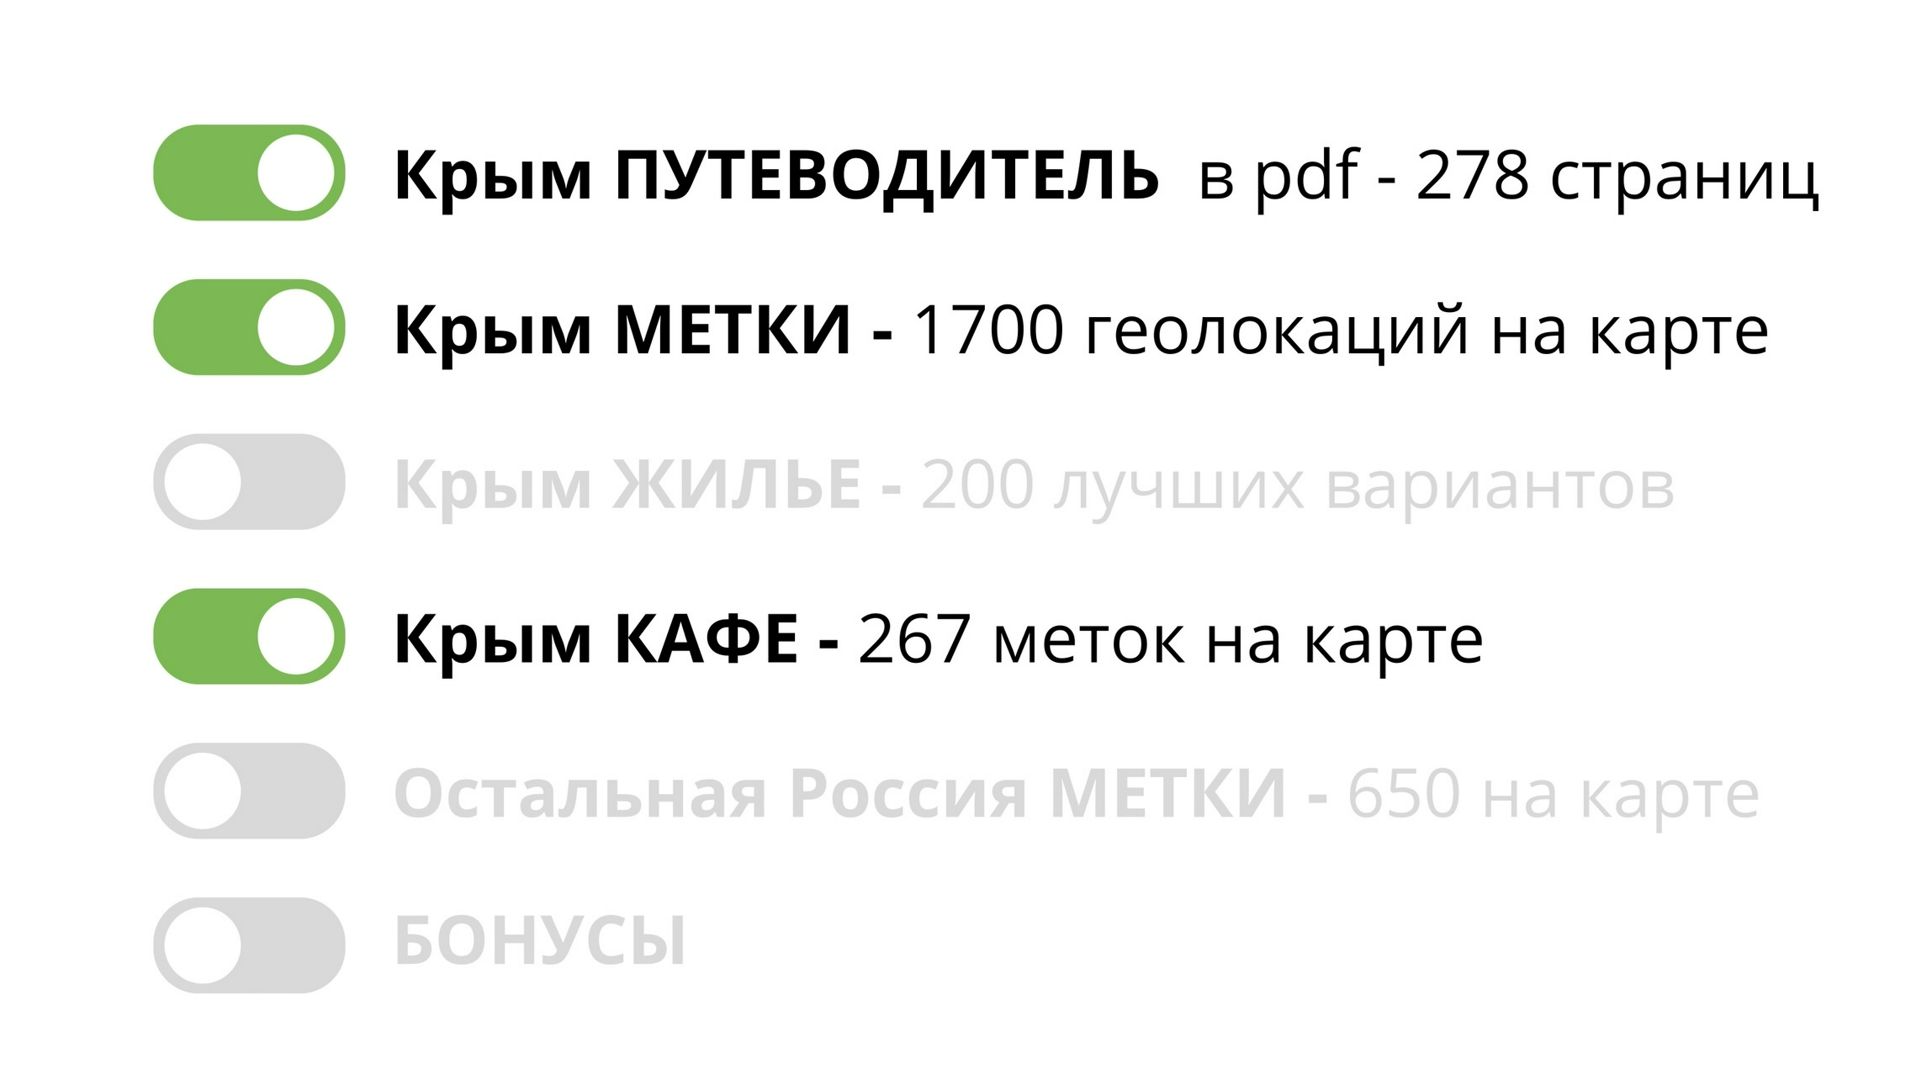 1️⃣2️⃣3️⃣ Крым: ПУТЕВОДИТЕЛЬ, 1700 меток на карте, КАФЕ